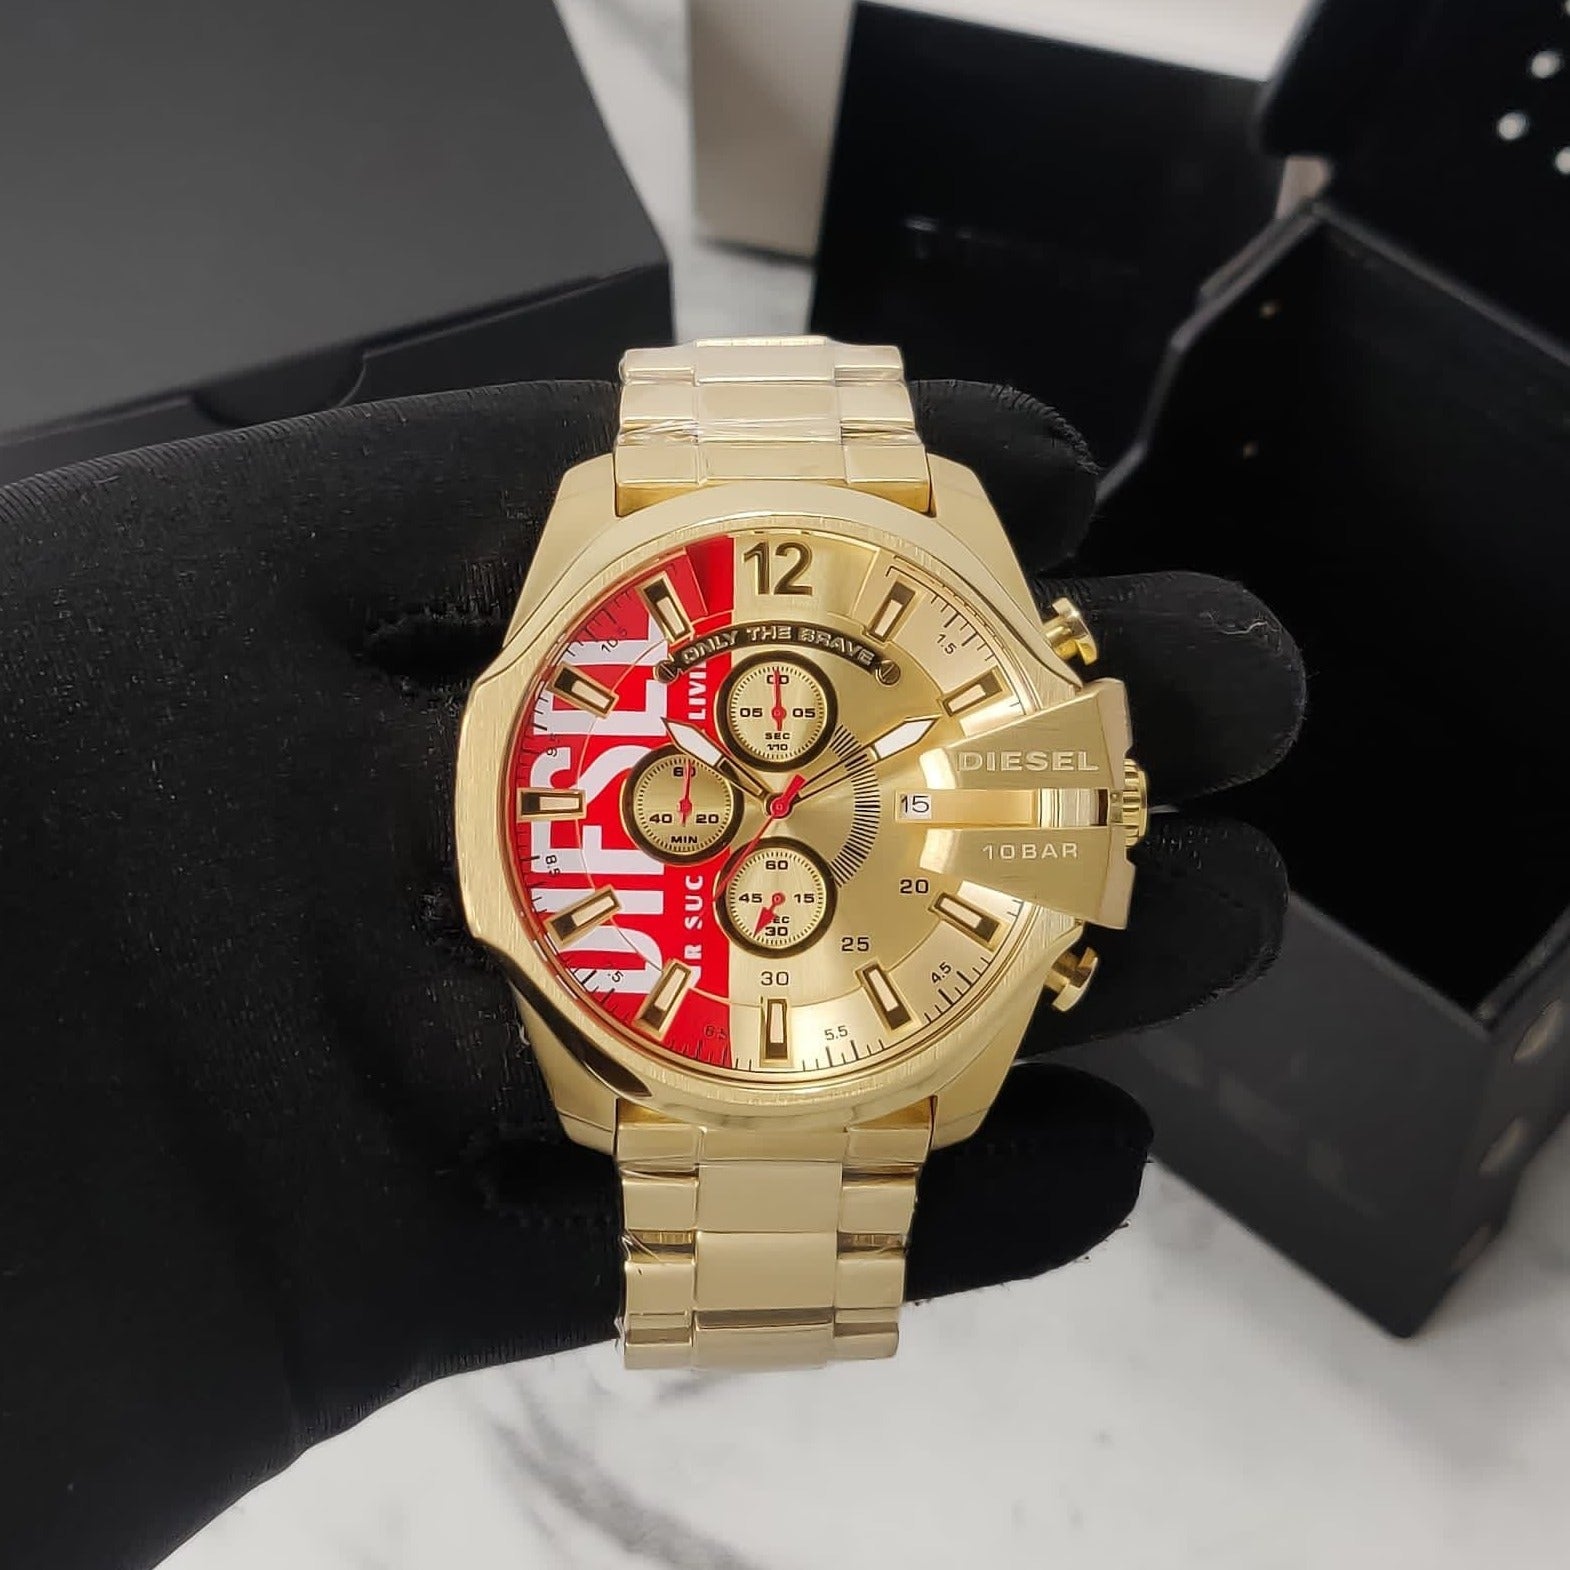 Amazing dsl luxury 10 bar watch